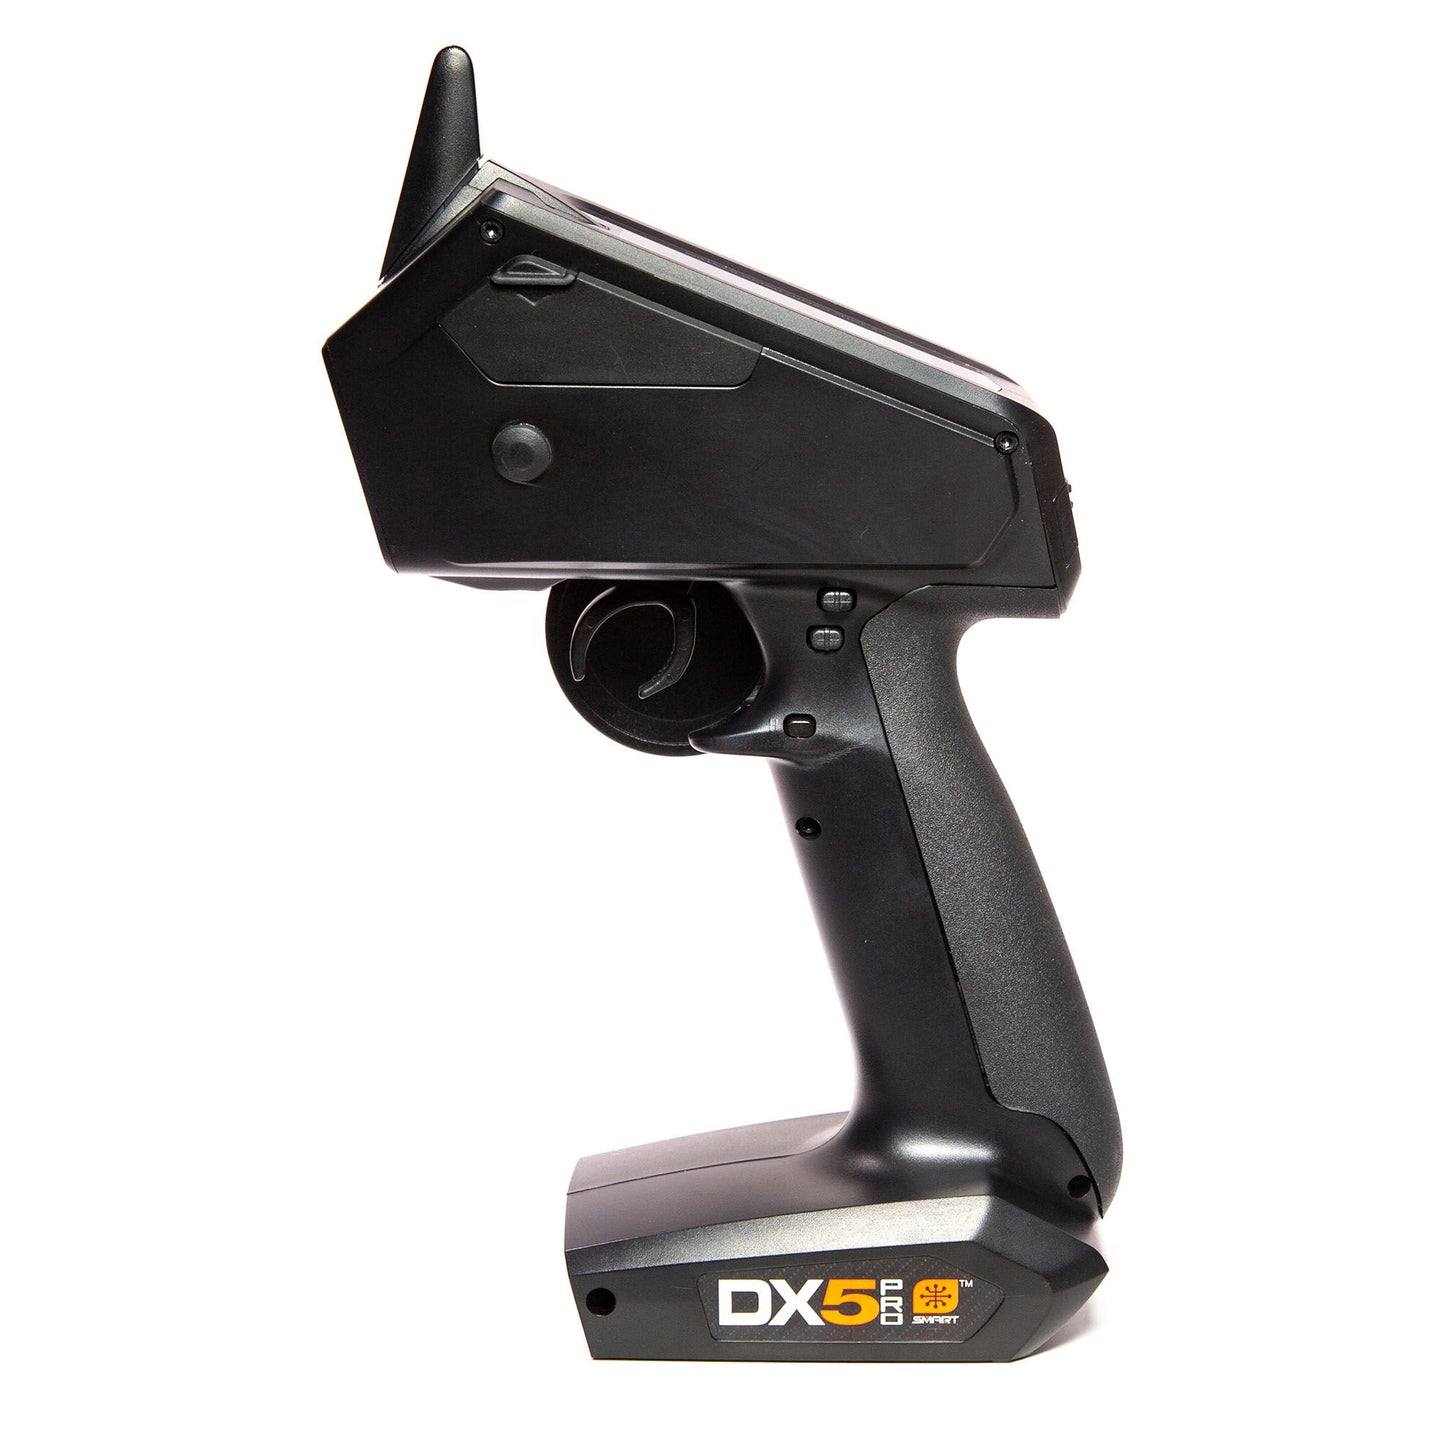 DX5 Pro 5-Channel DSMR Transmitter Only